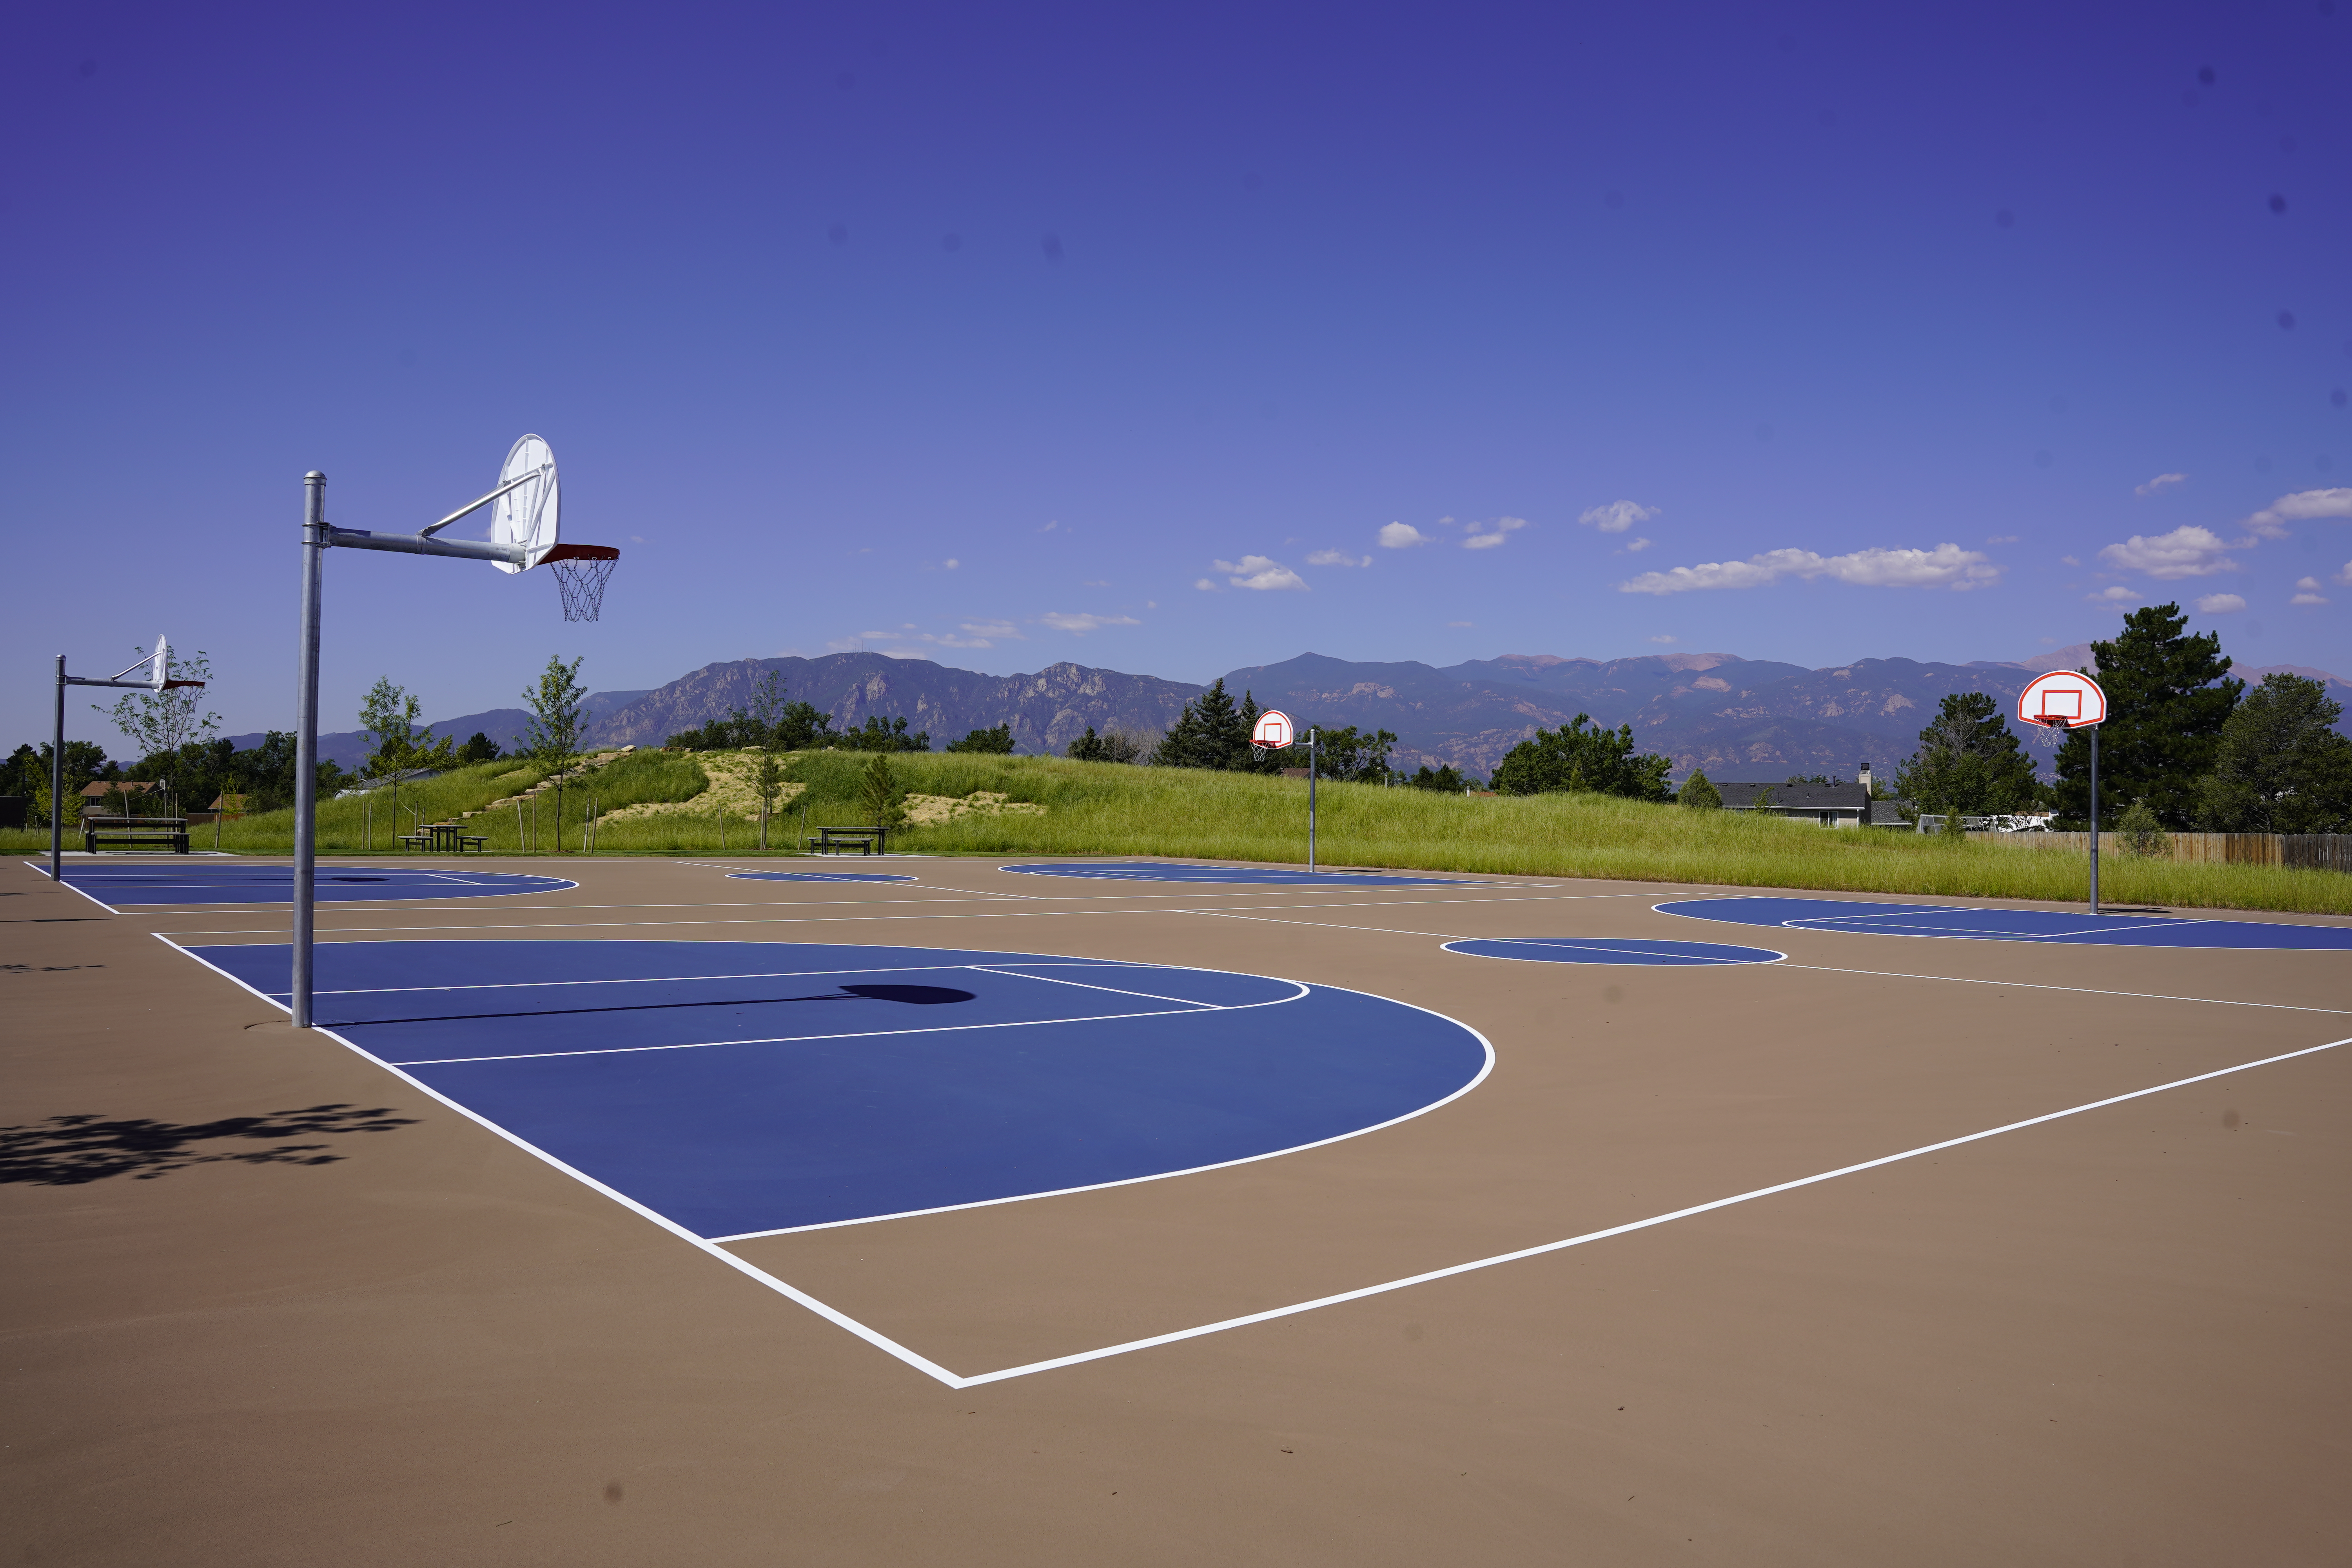 panorama basketball courts park near multi Royalty Free image